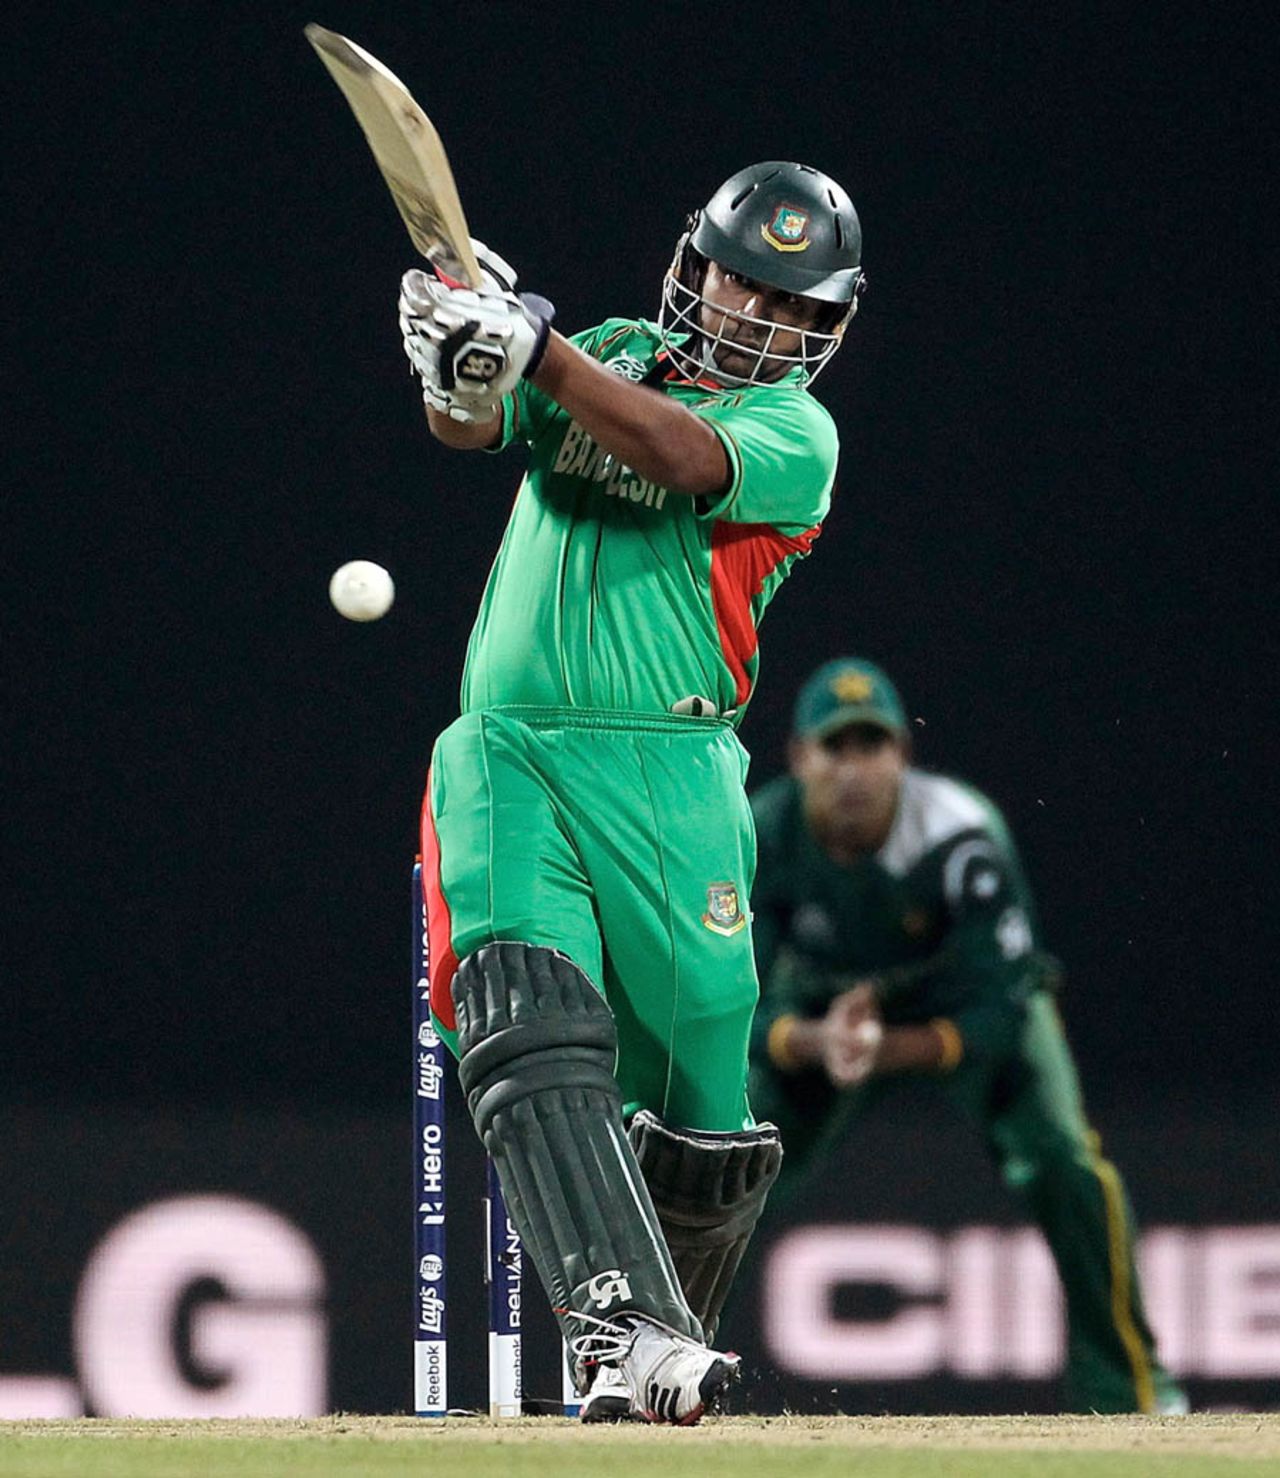 Tamim Iqbal scored a quick 24 before being run out, Bangladesh v Pakistan, World Twenty20 2012, Group D, Pallekele, September 25, 2012